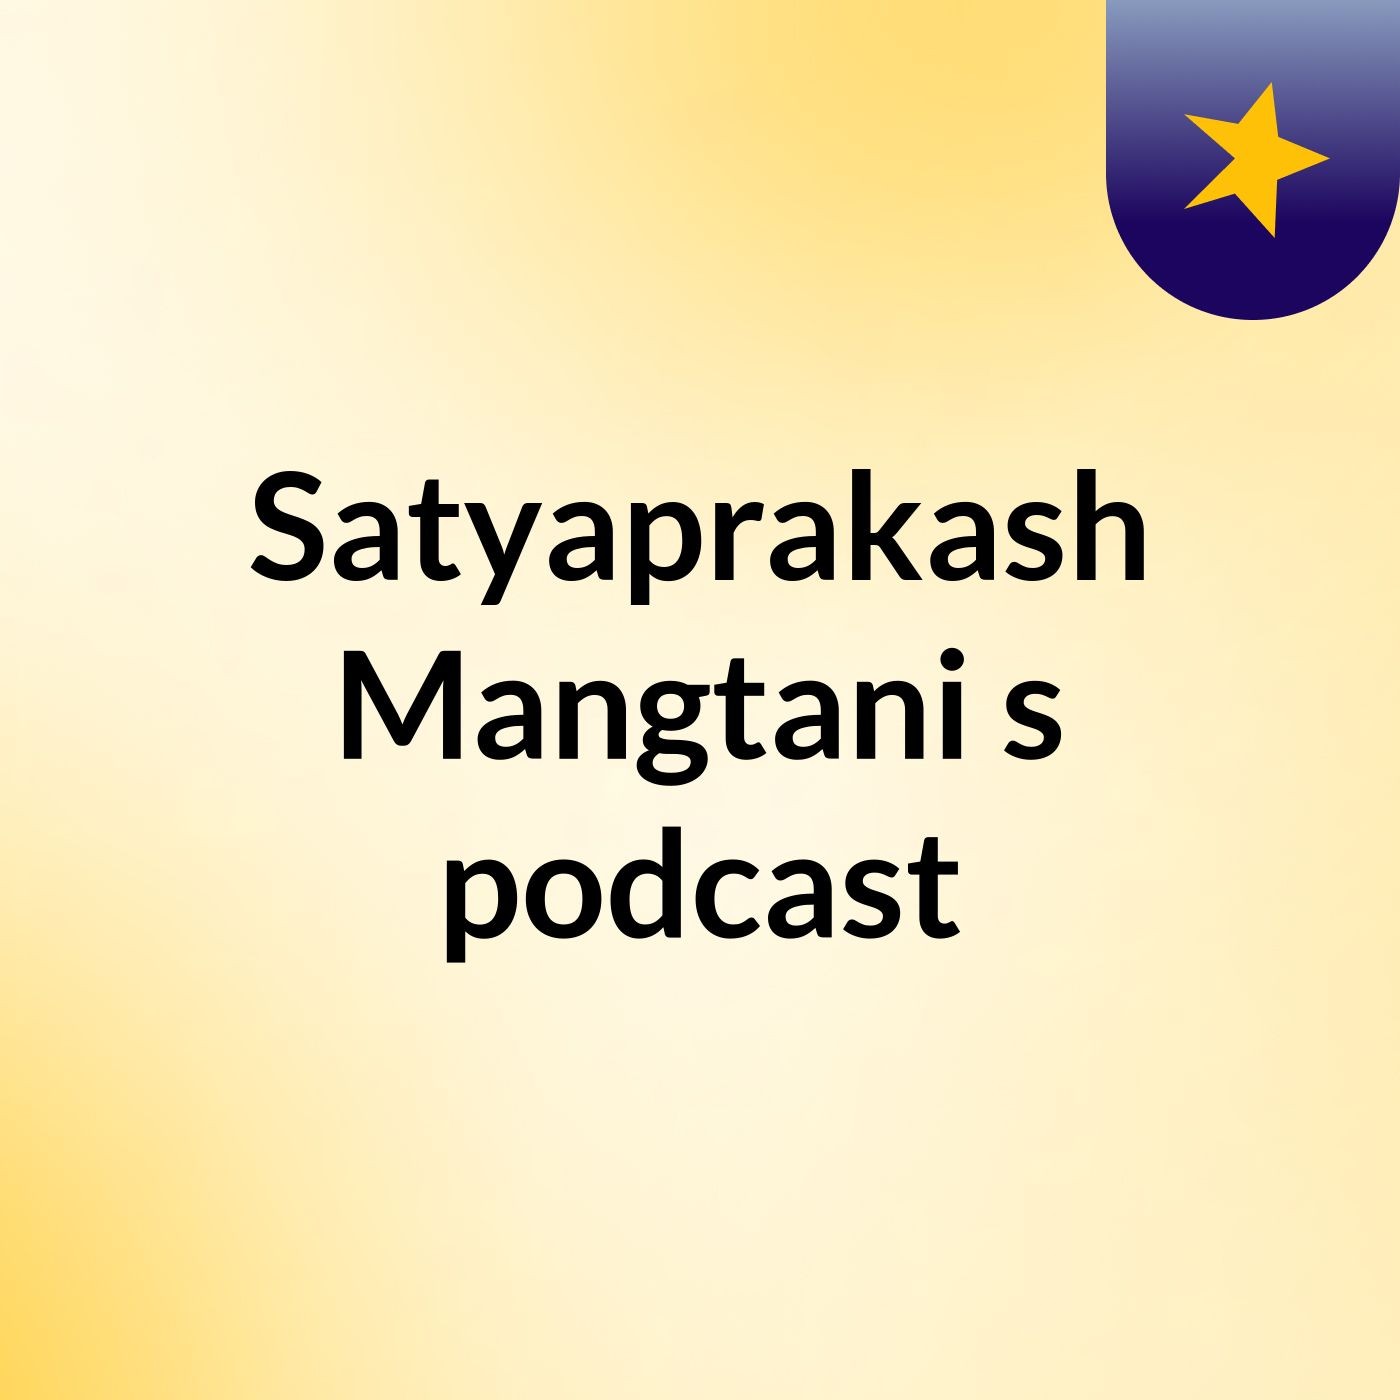 Satyaprakash Mangtani's podcast